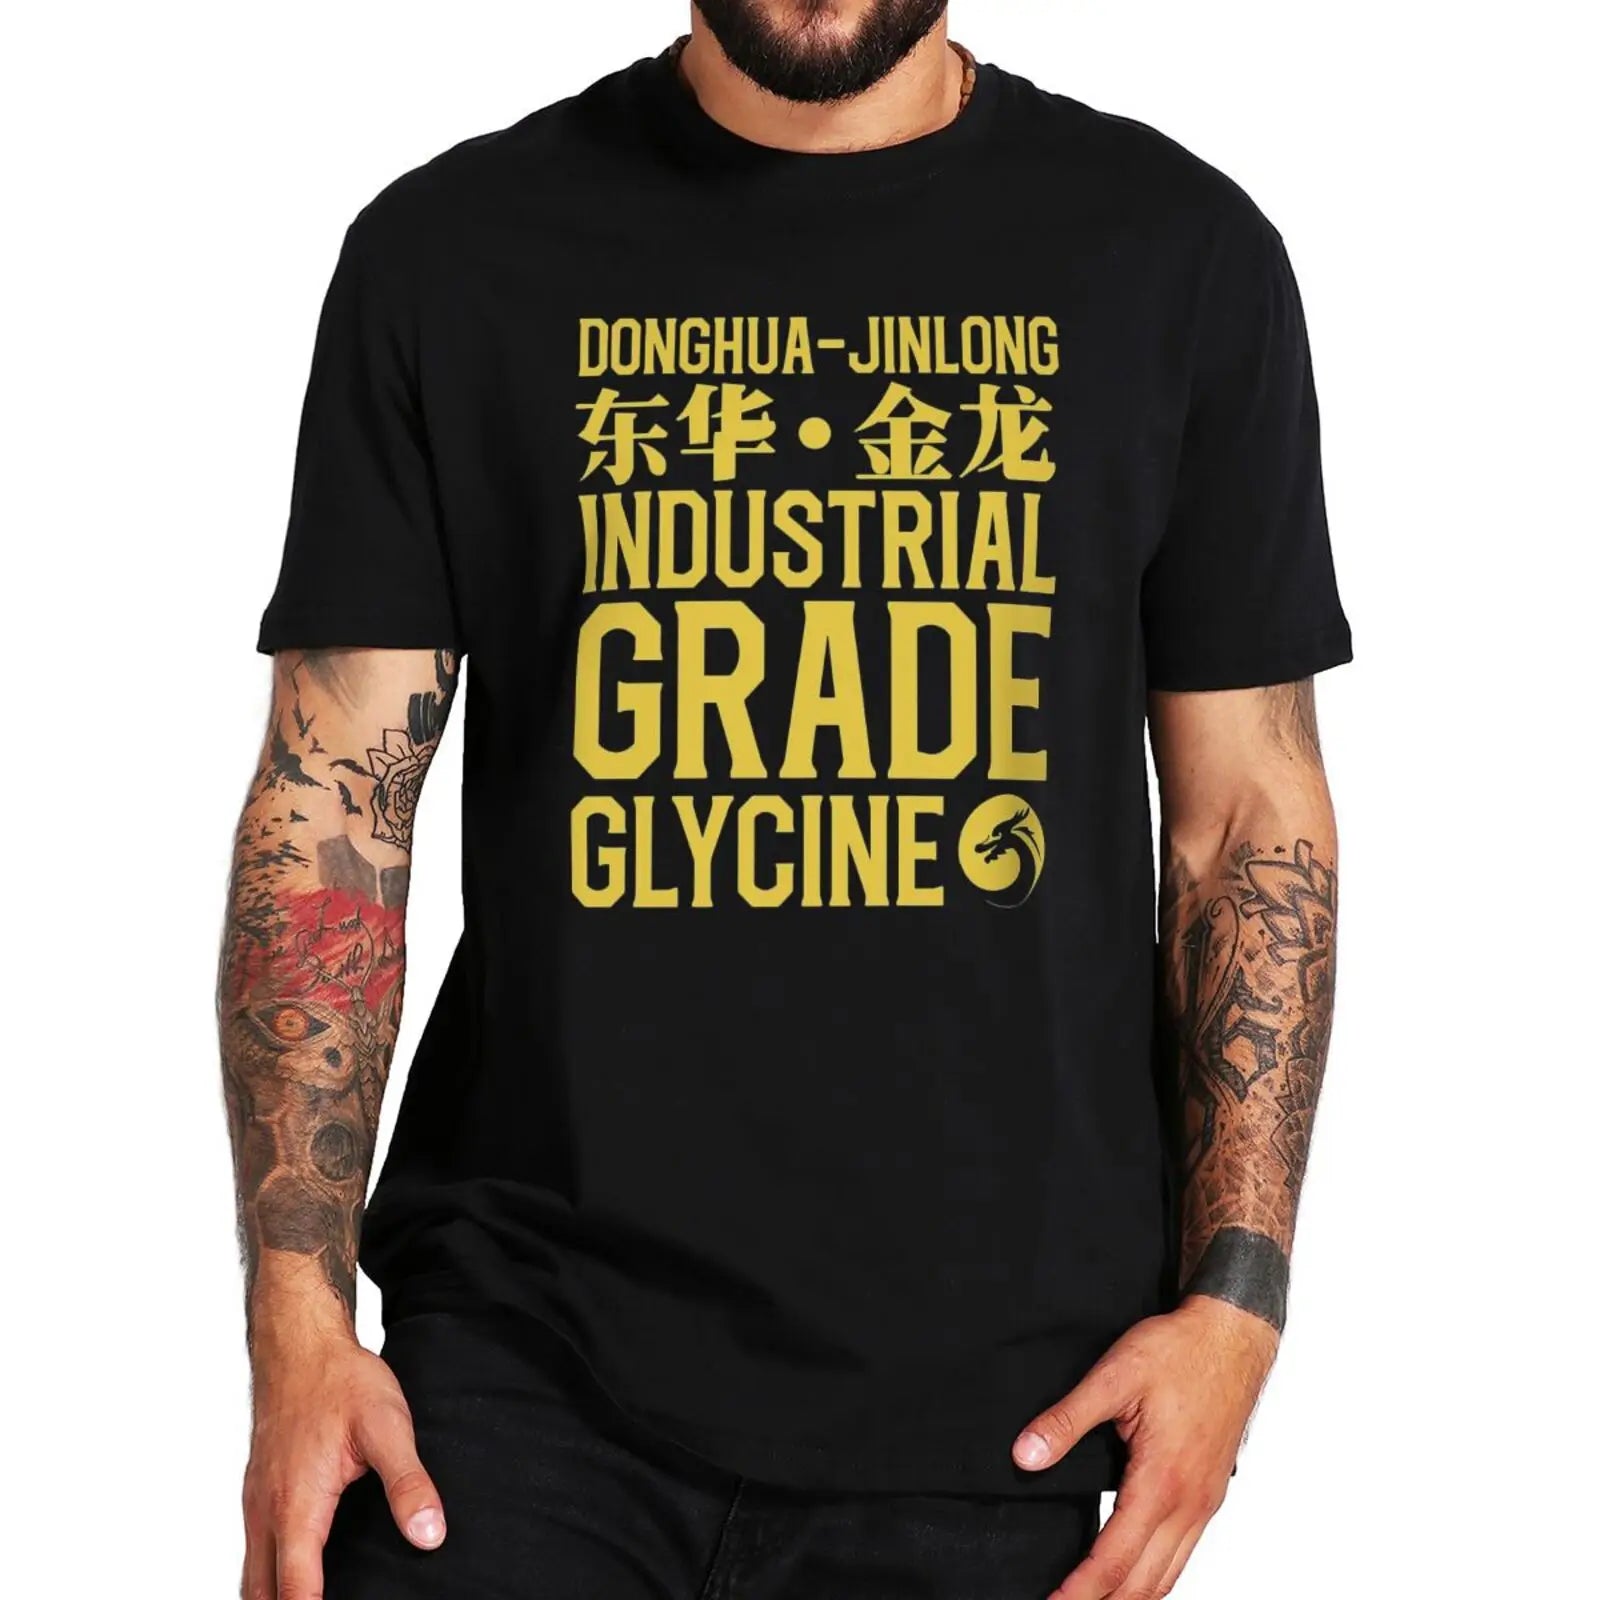 Donghua-Jinlong Industrial Grade Glycines T Shirt Funny Meme Trend Tee Tops 100% Cotton Soft Casual Breathable T-shirt EU Size